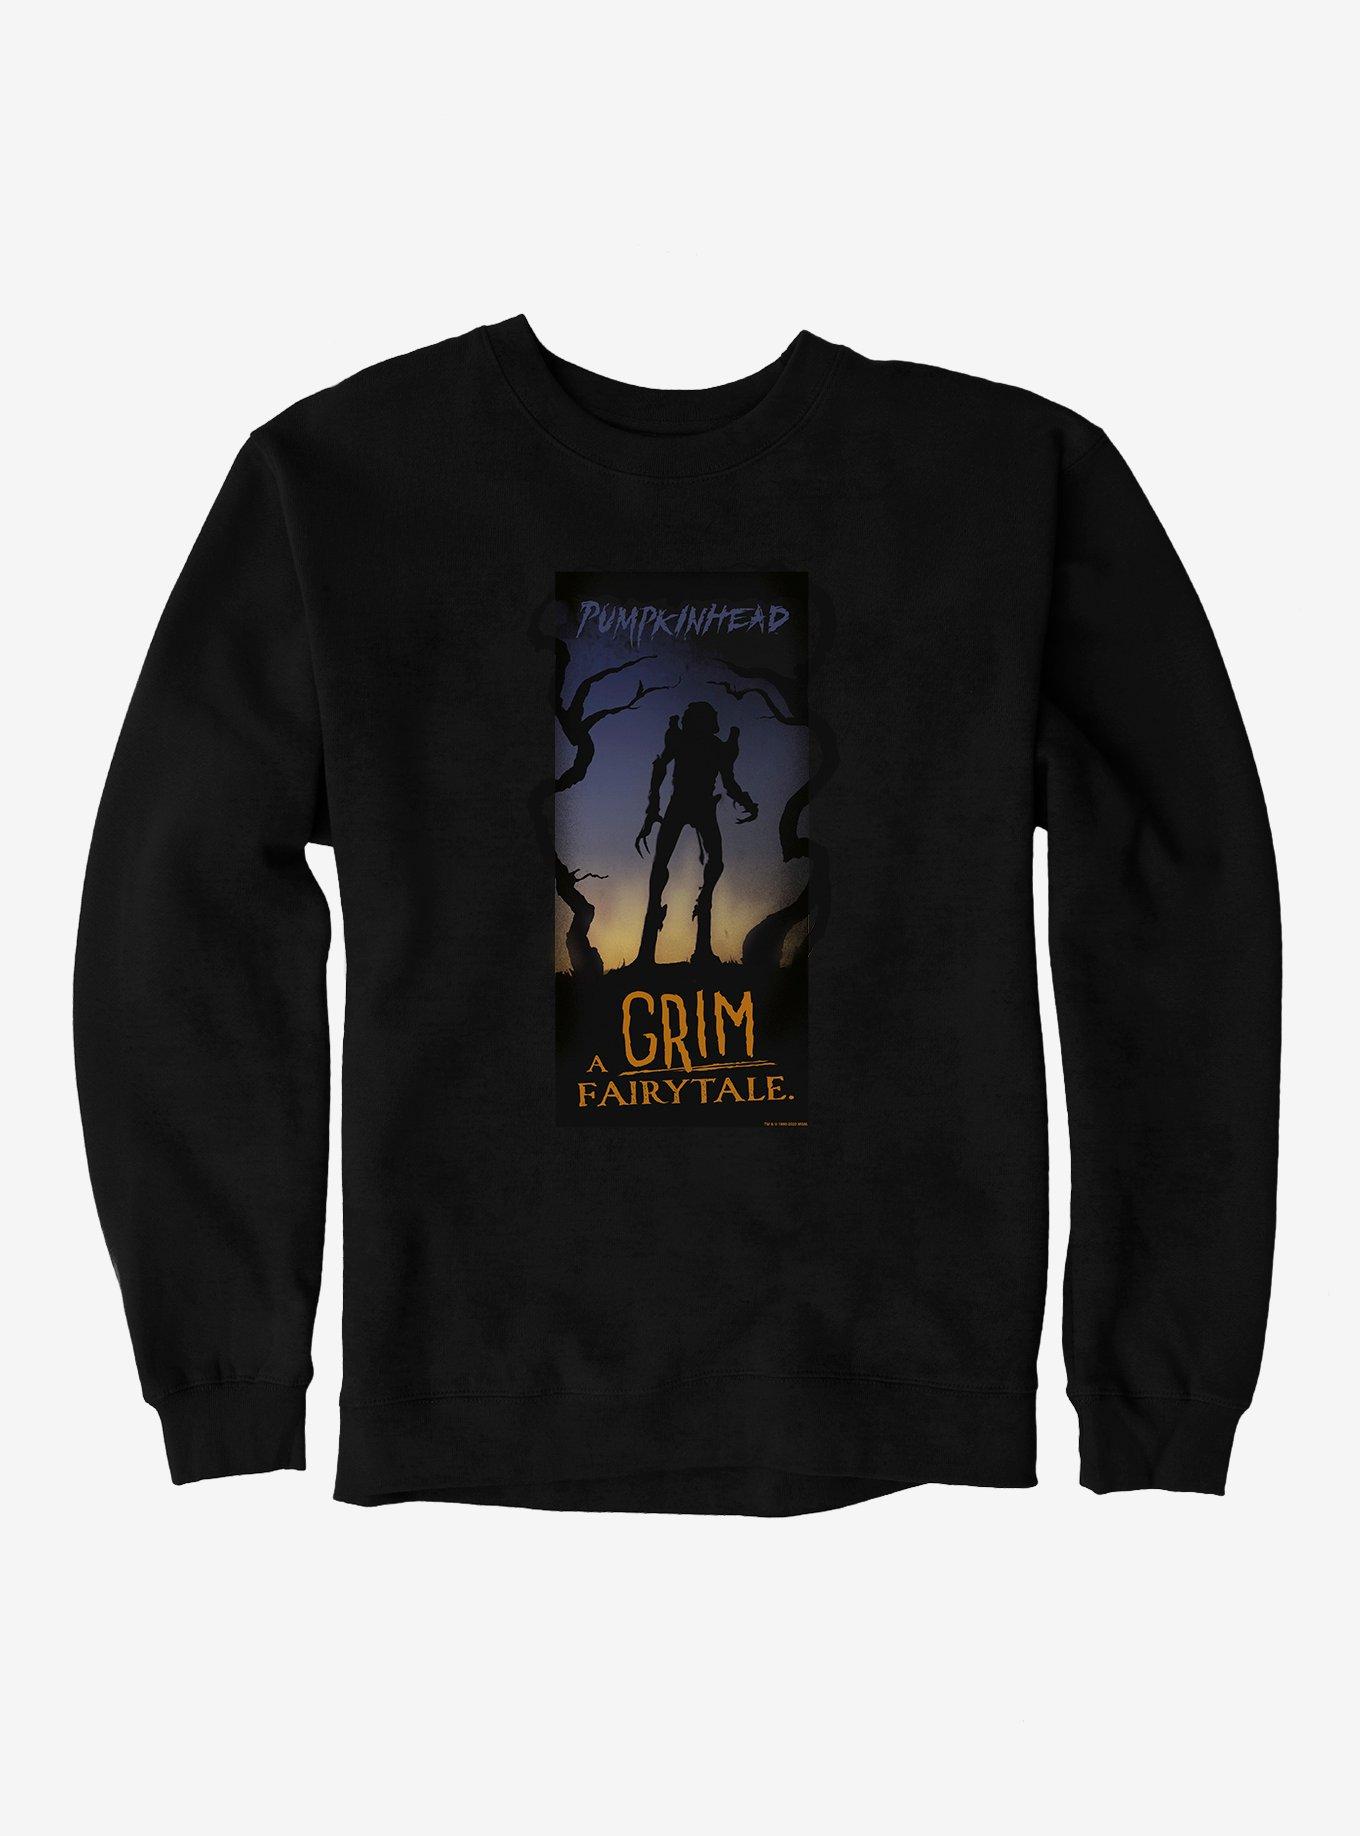 Pumpkinhead Grim Fairytale Sweatshirt, BLACK, hi-res